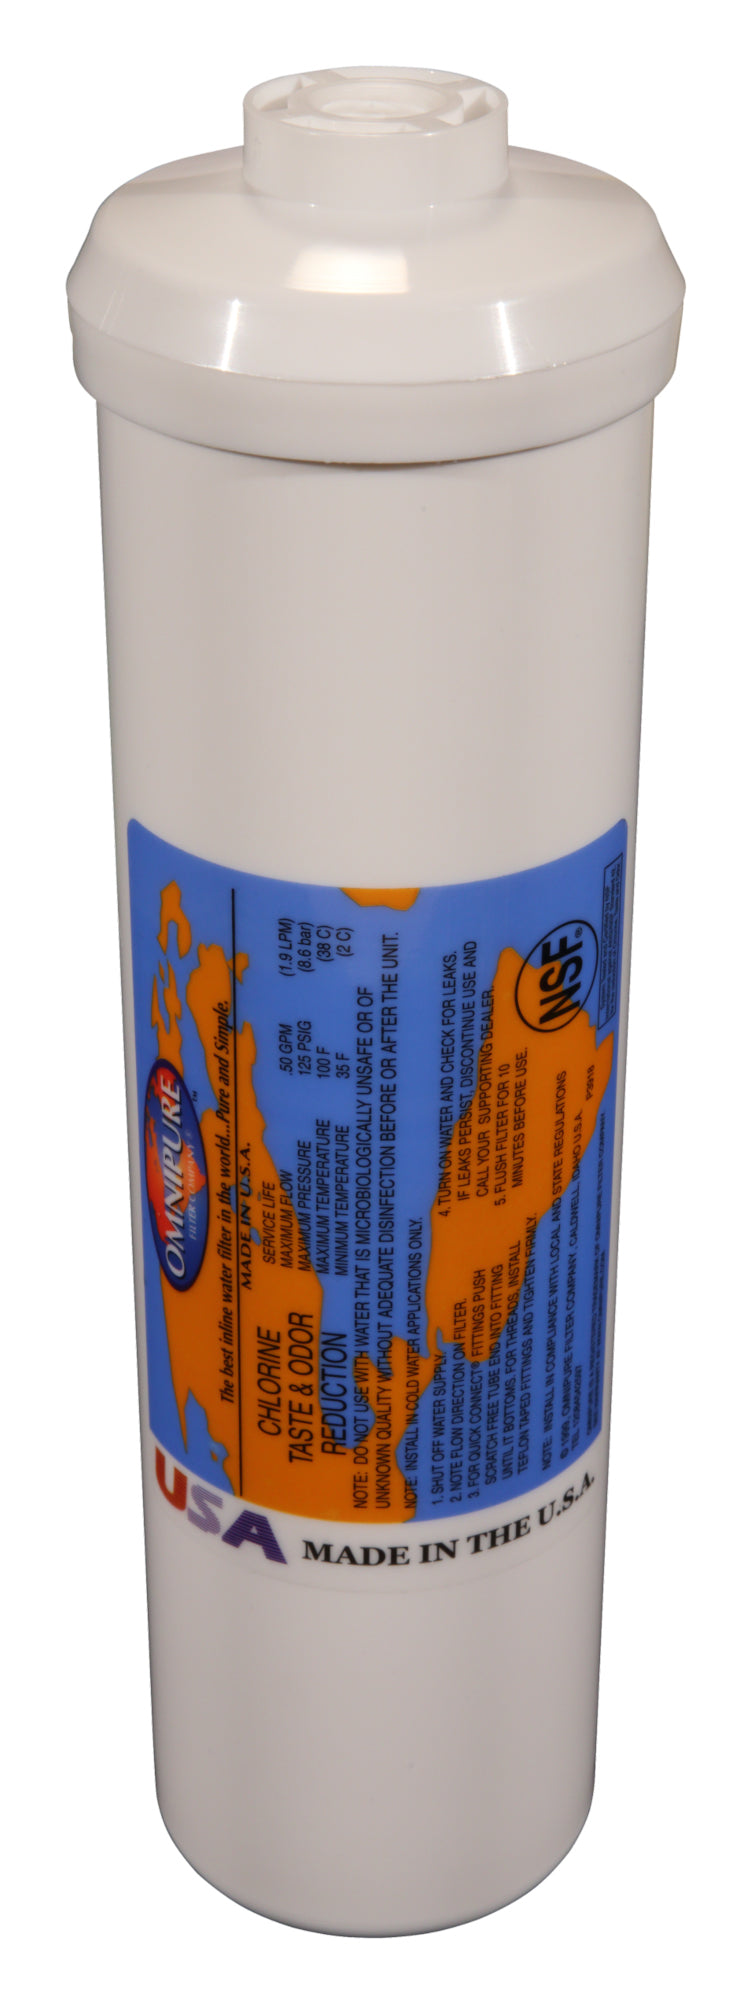 Omnipure Water Filter - K5515-P